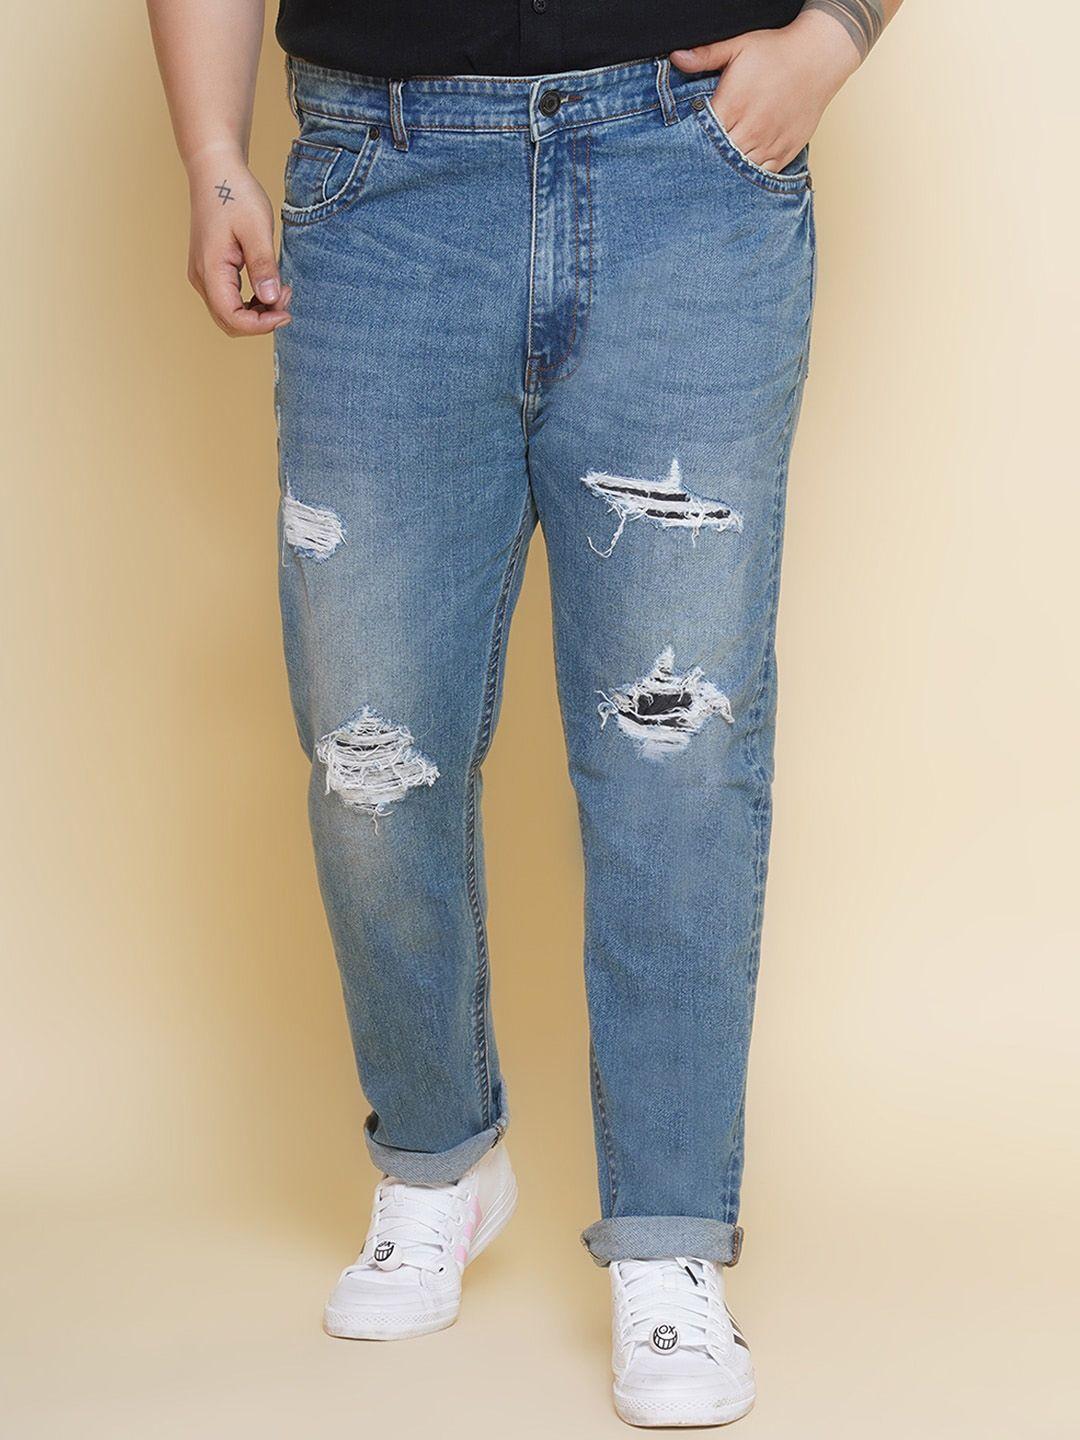 john pride plus size men jean light fade mildly distressed stretchable jeans